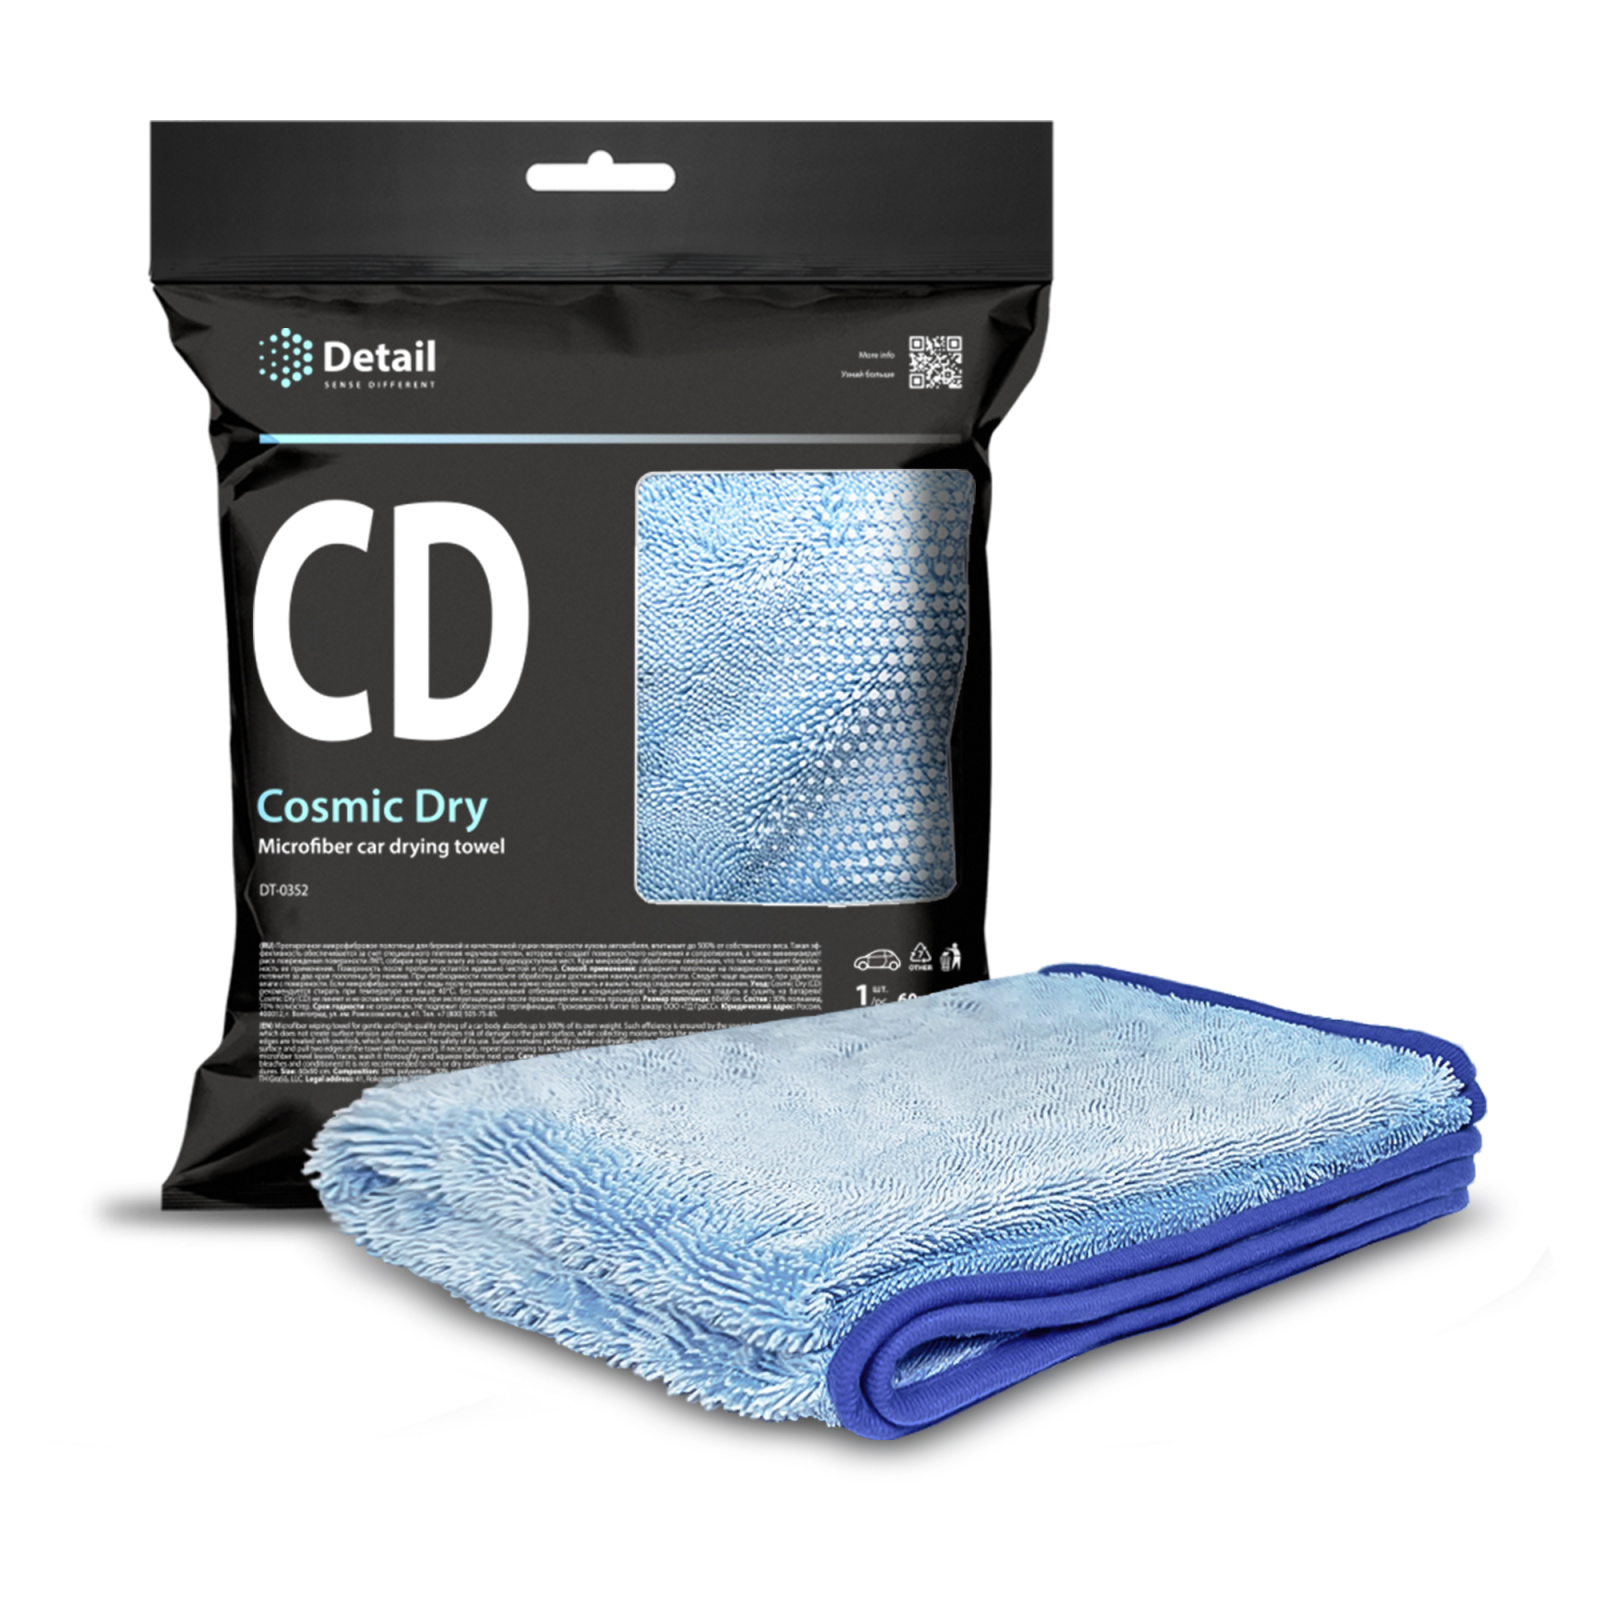 

Микрофибровое полотенце для сушки кузова CD "Cosmic Dry" 60*90 см в упаковке, DT-0515